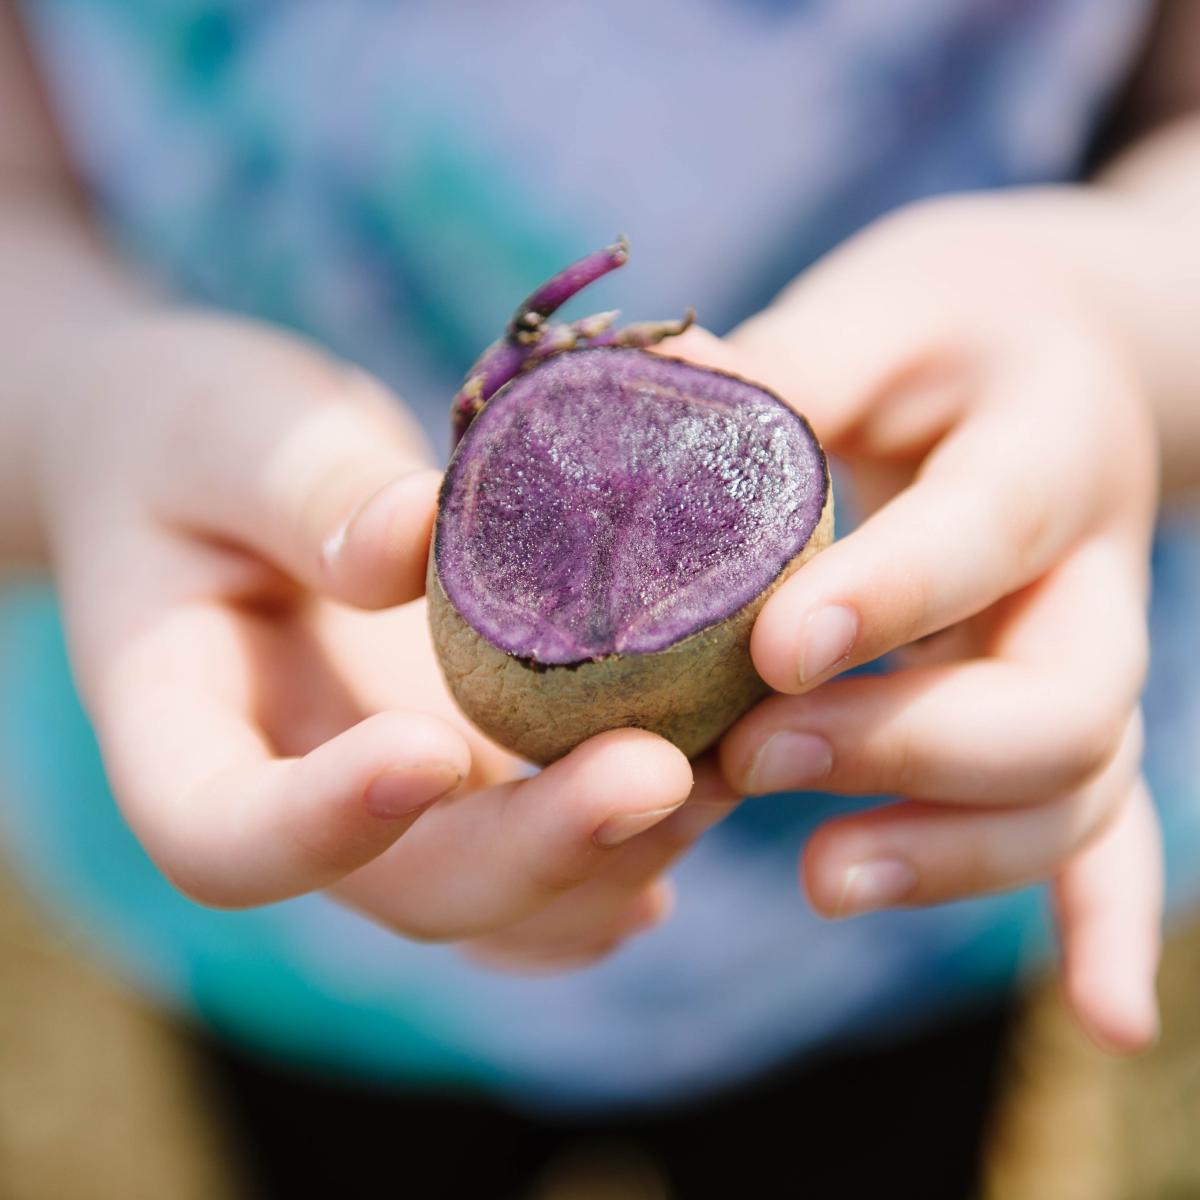 a freshly harvested purple potato